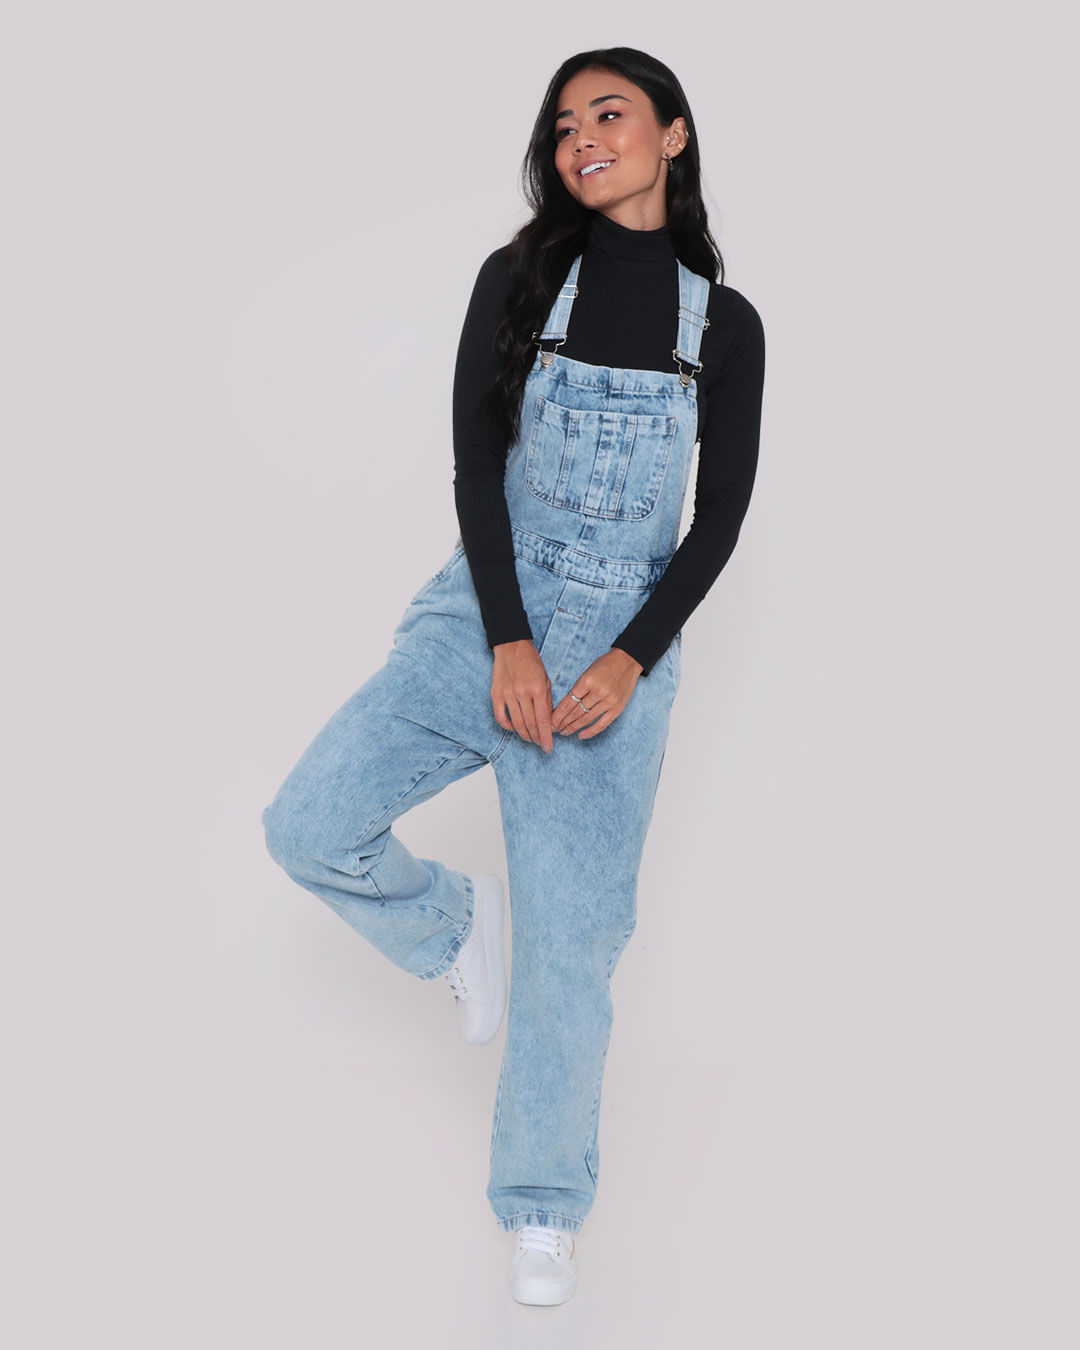 Jardineira-Jeans-Feminina-Azul-Claro